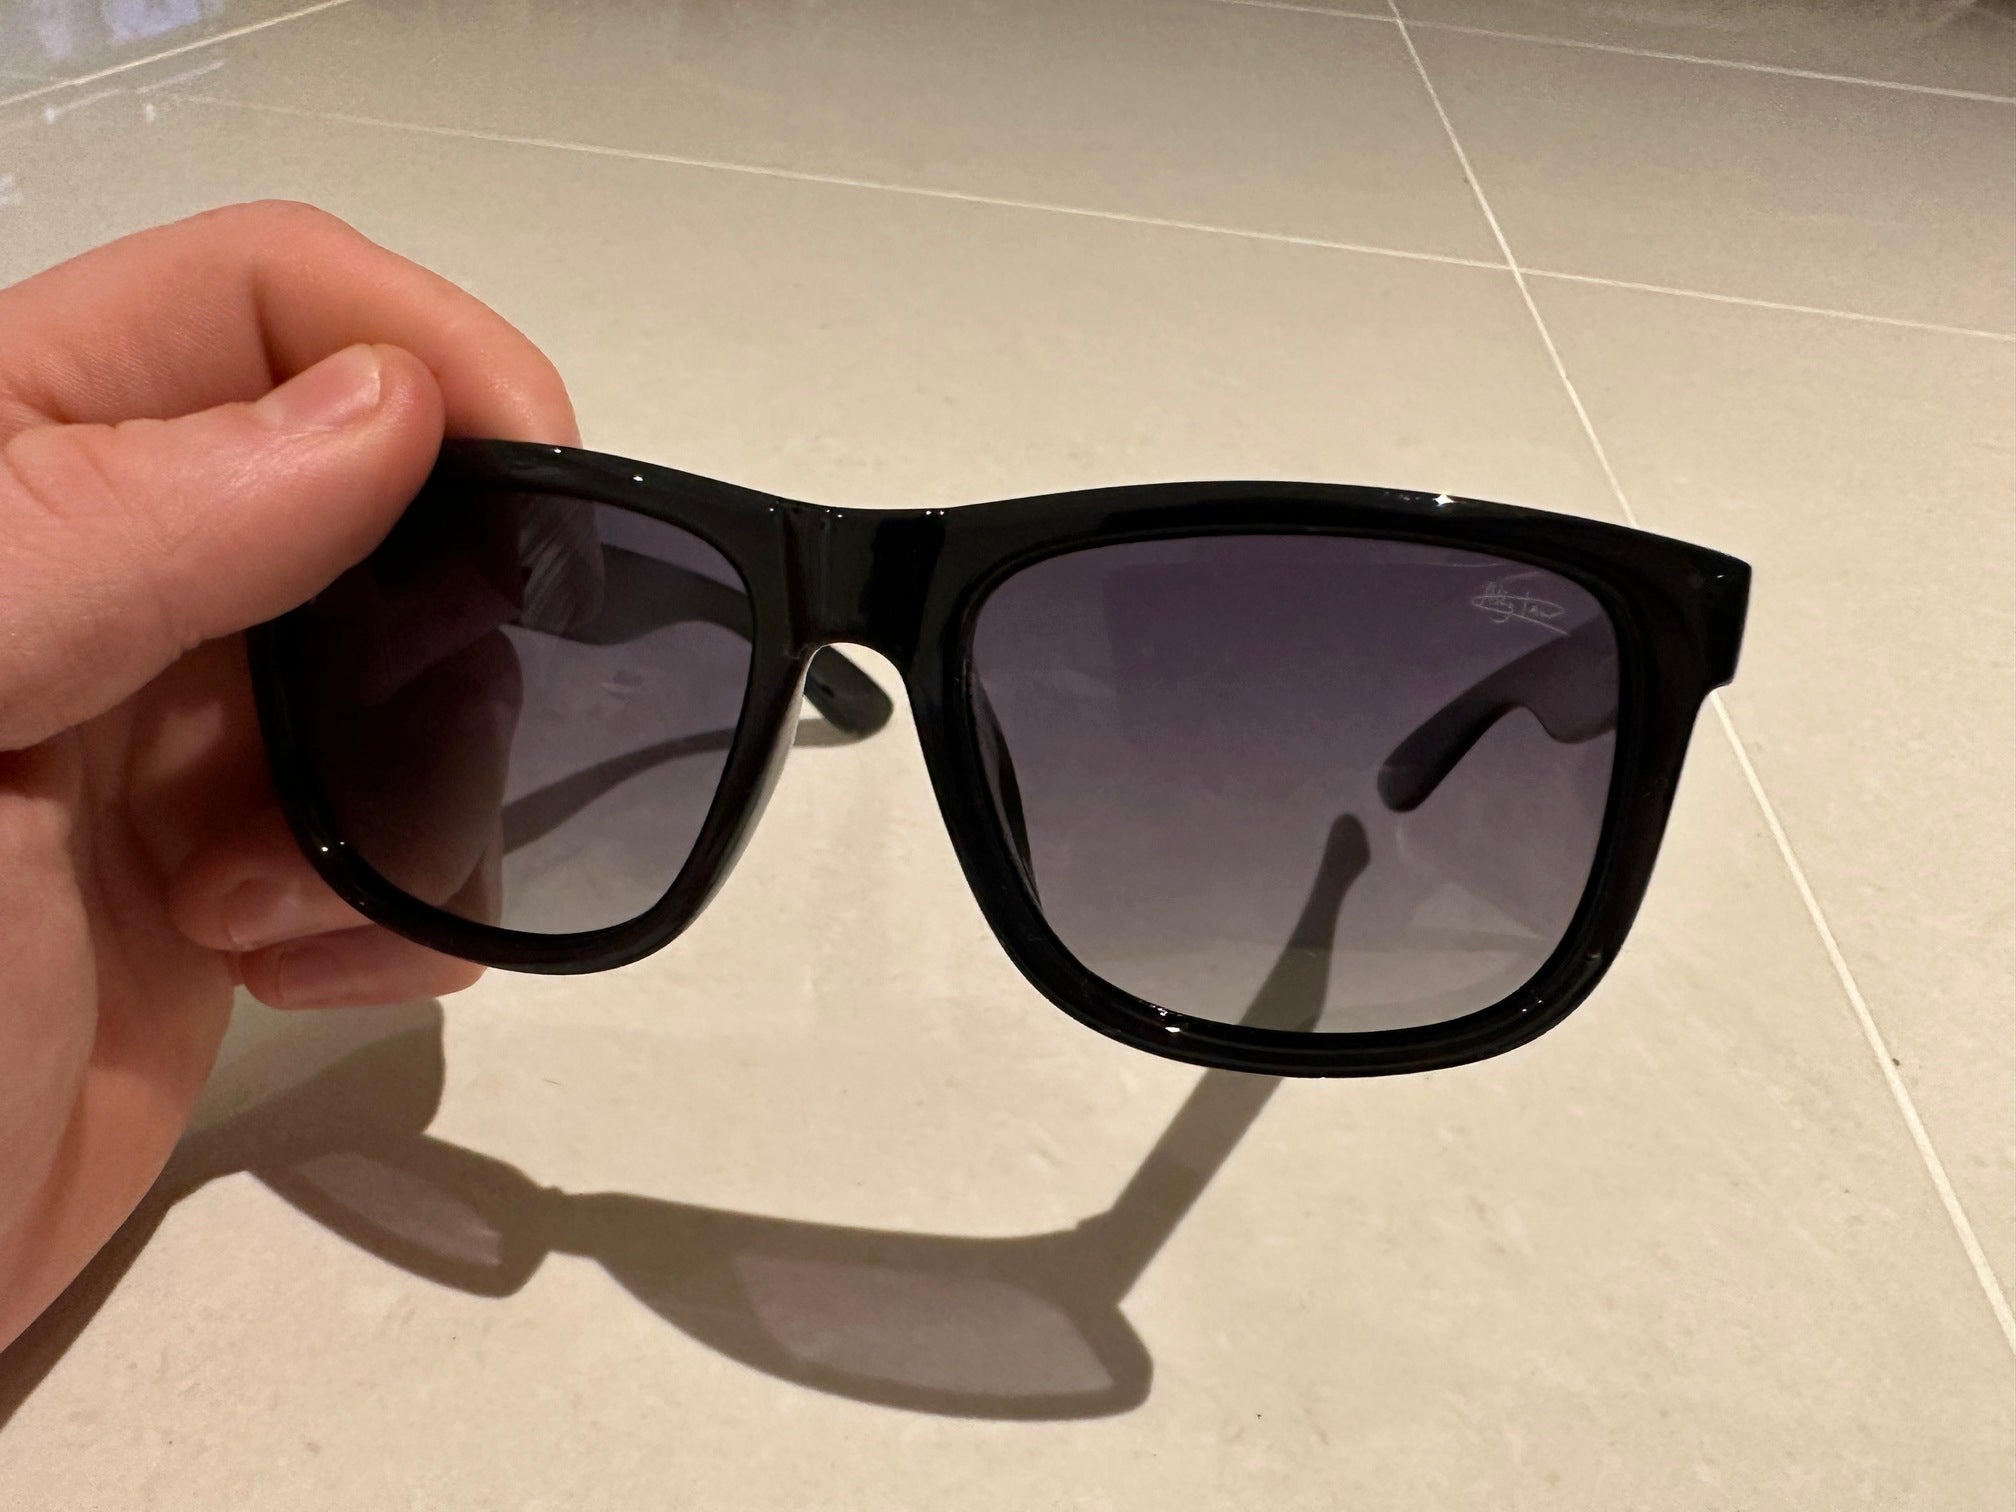 It's a madness sunglasses - Black